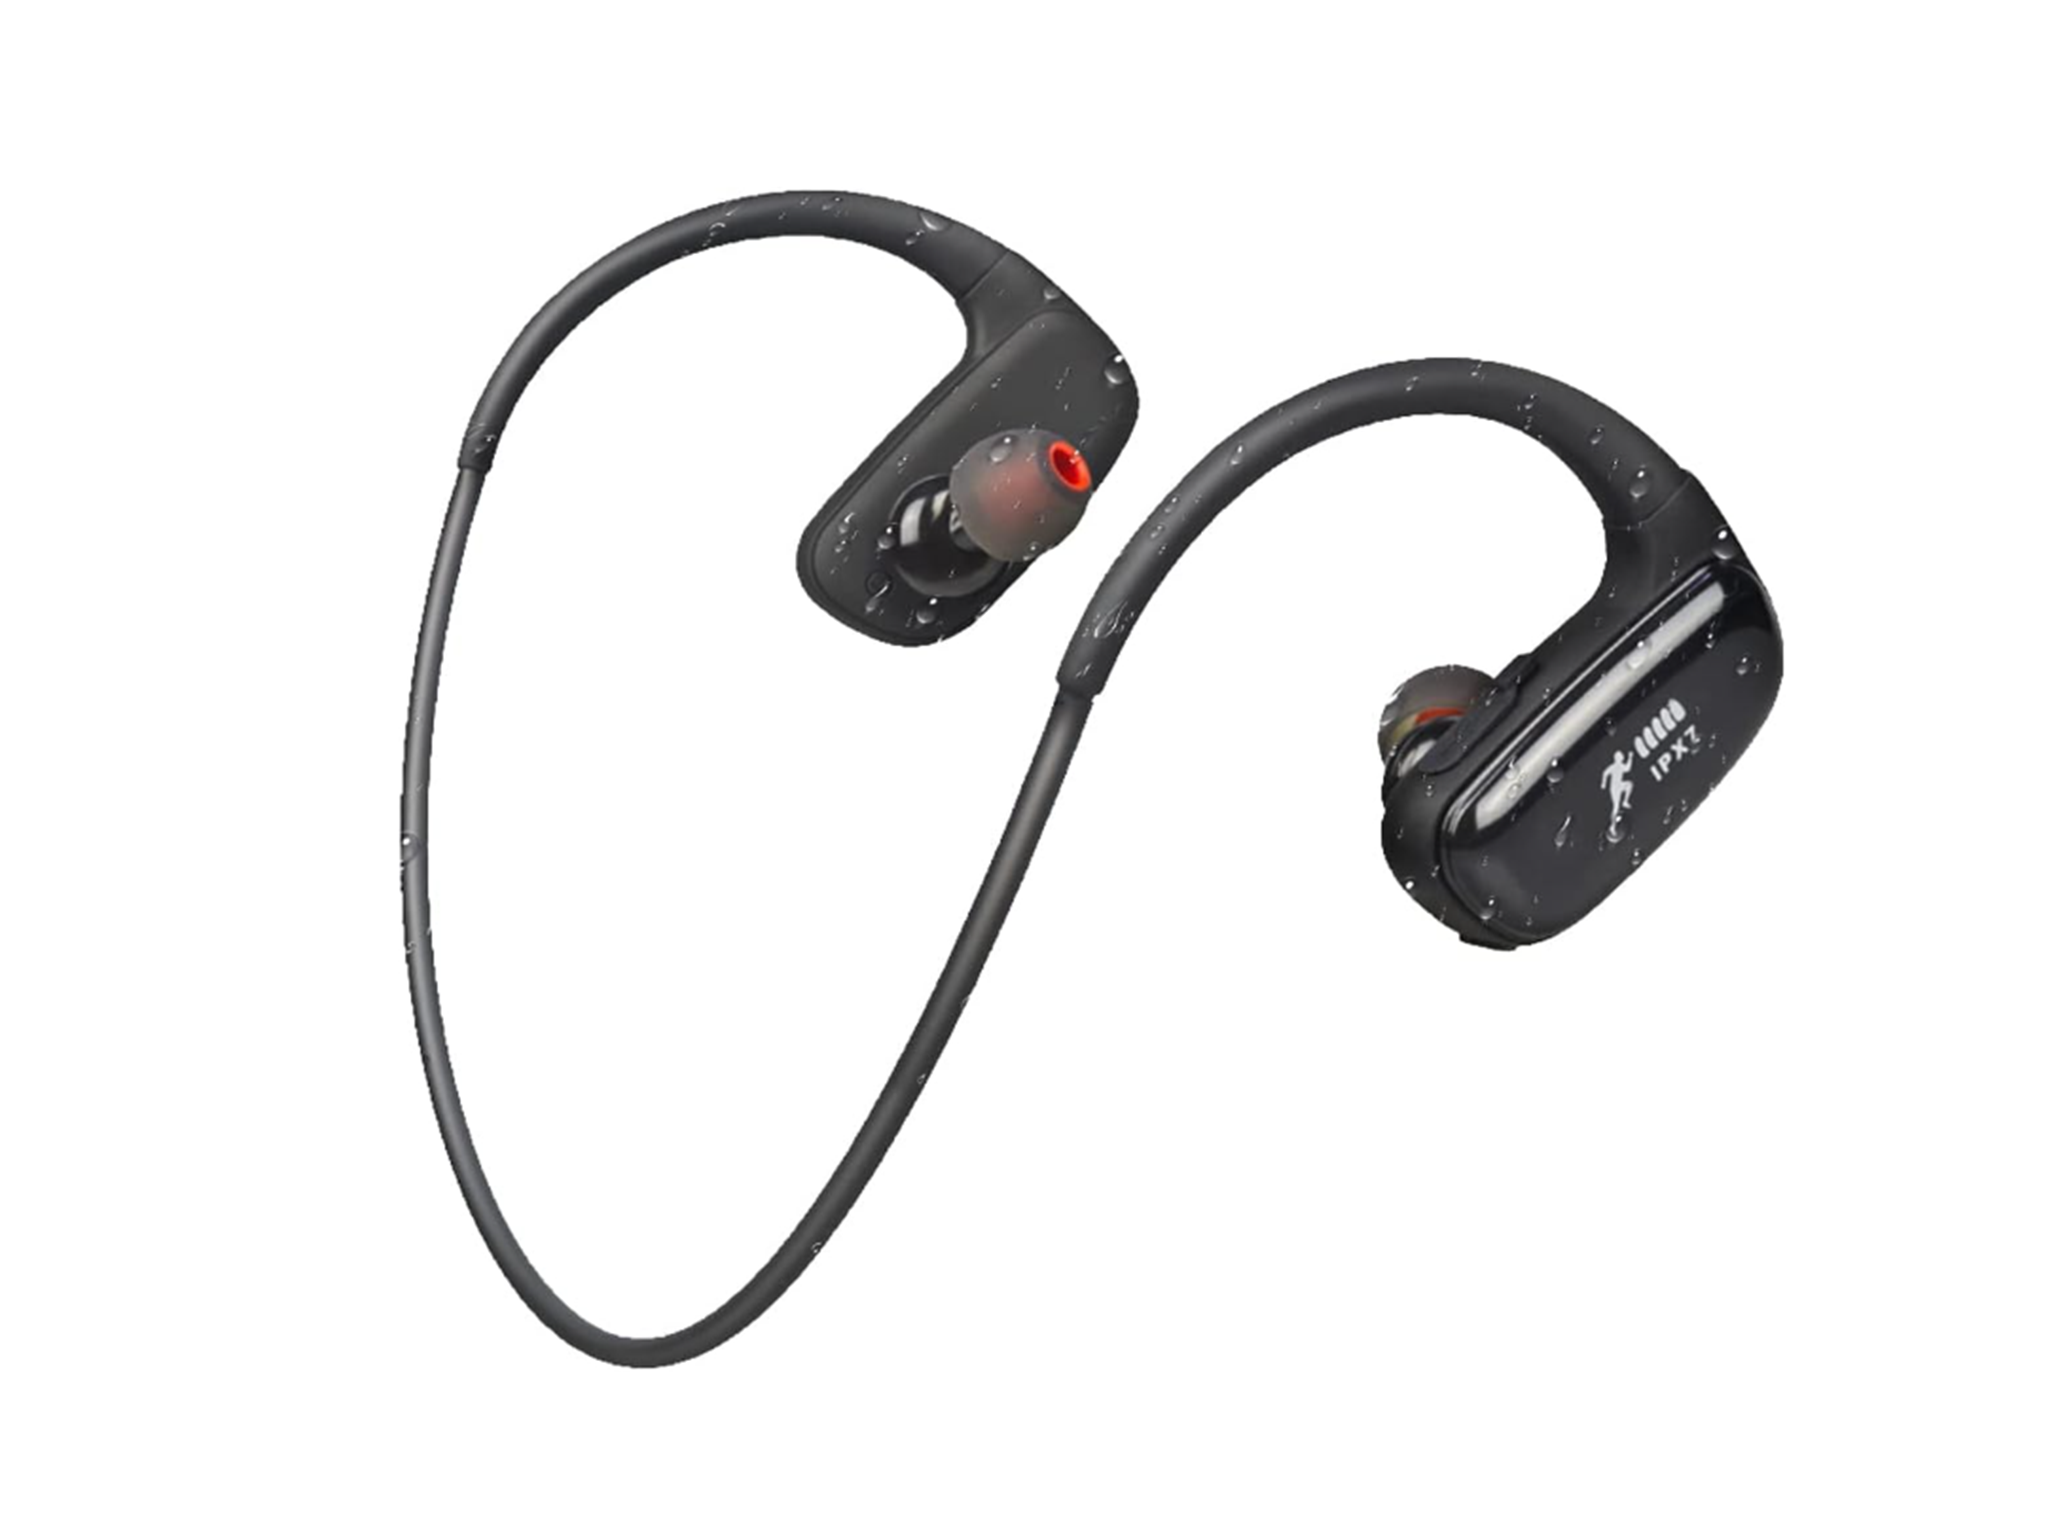 Cyboris swimming headphones